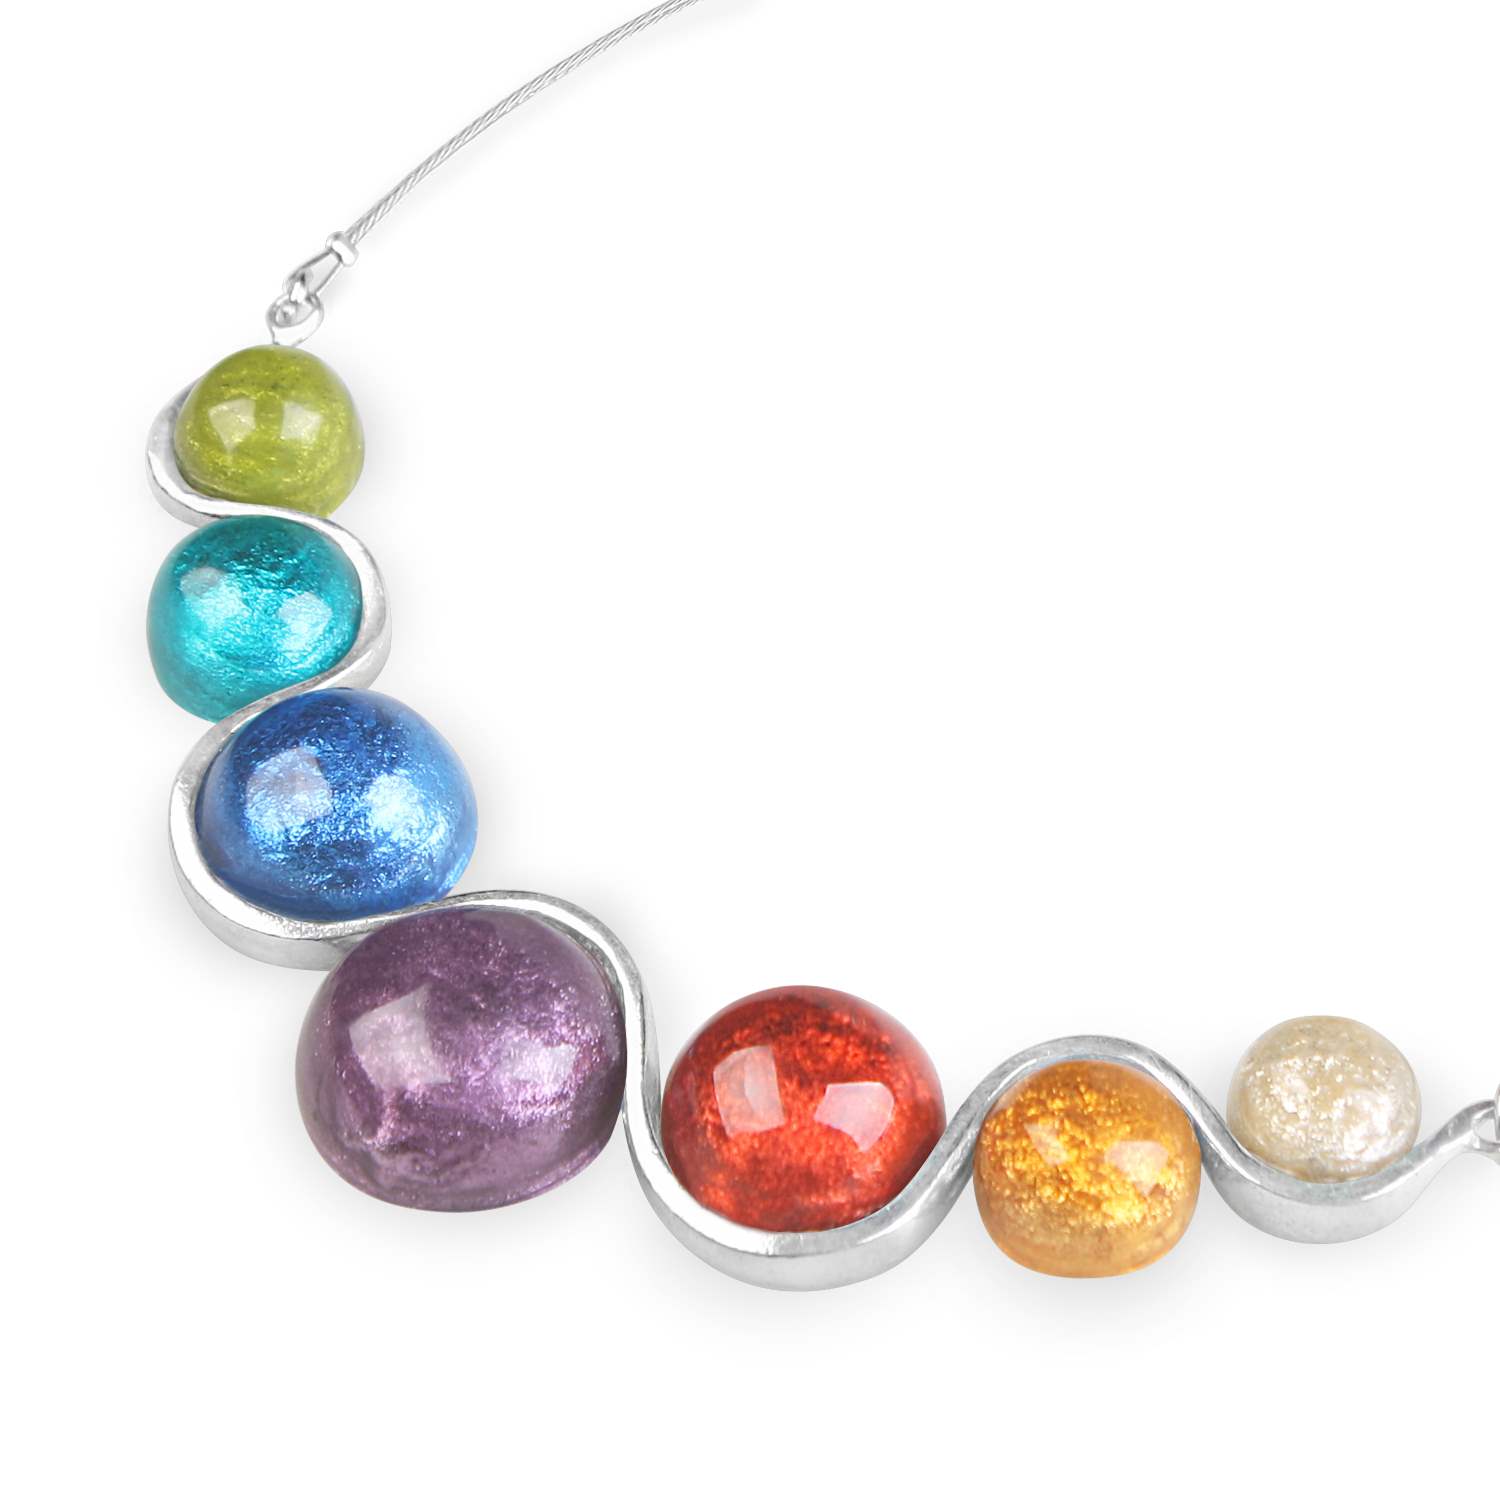 Rainbow Bubble Necklace